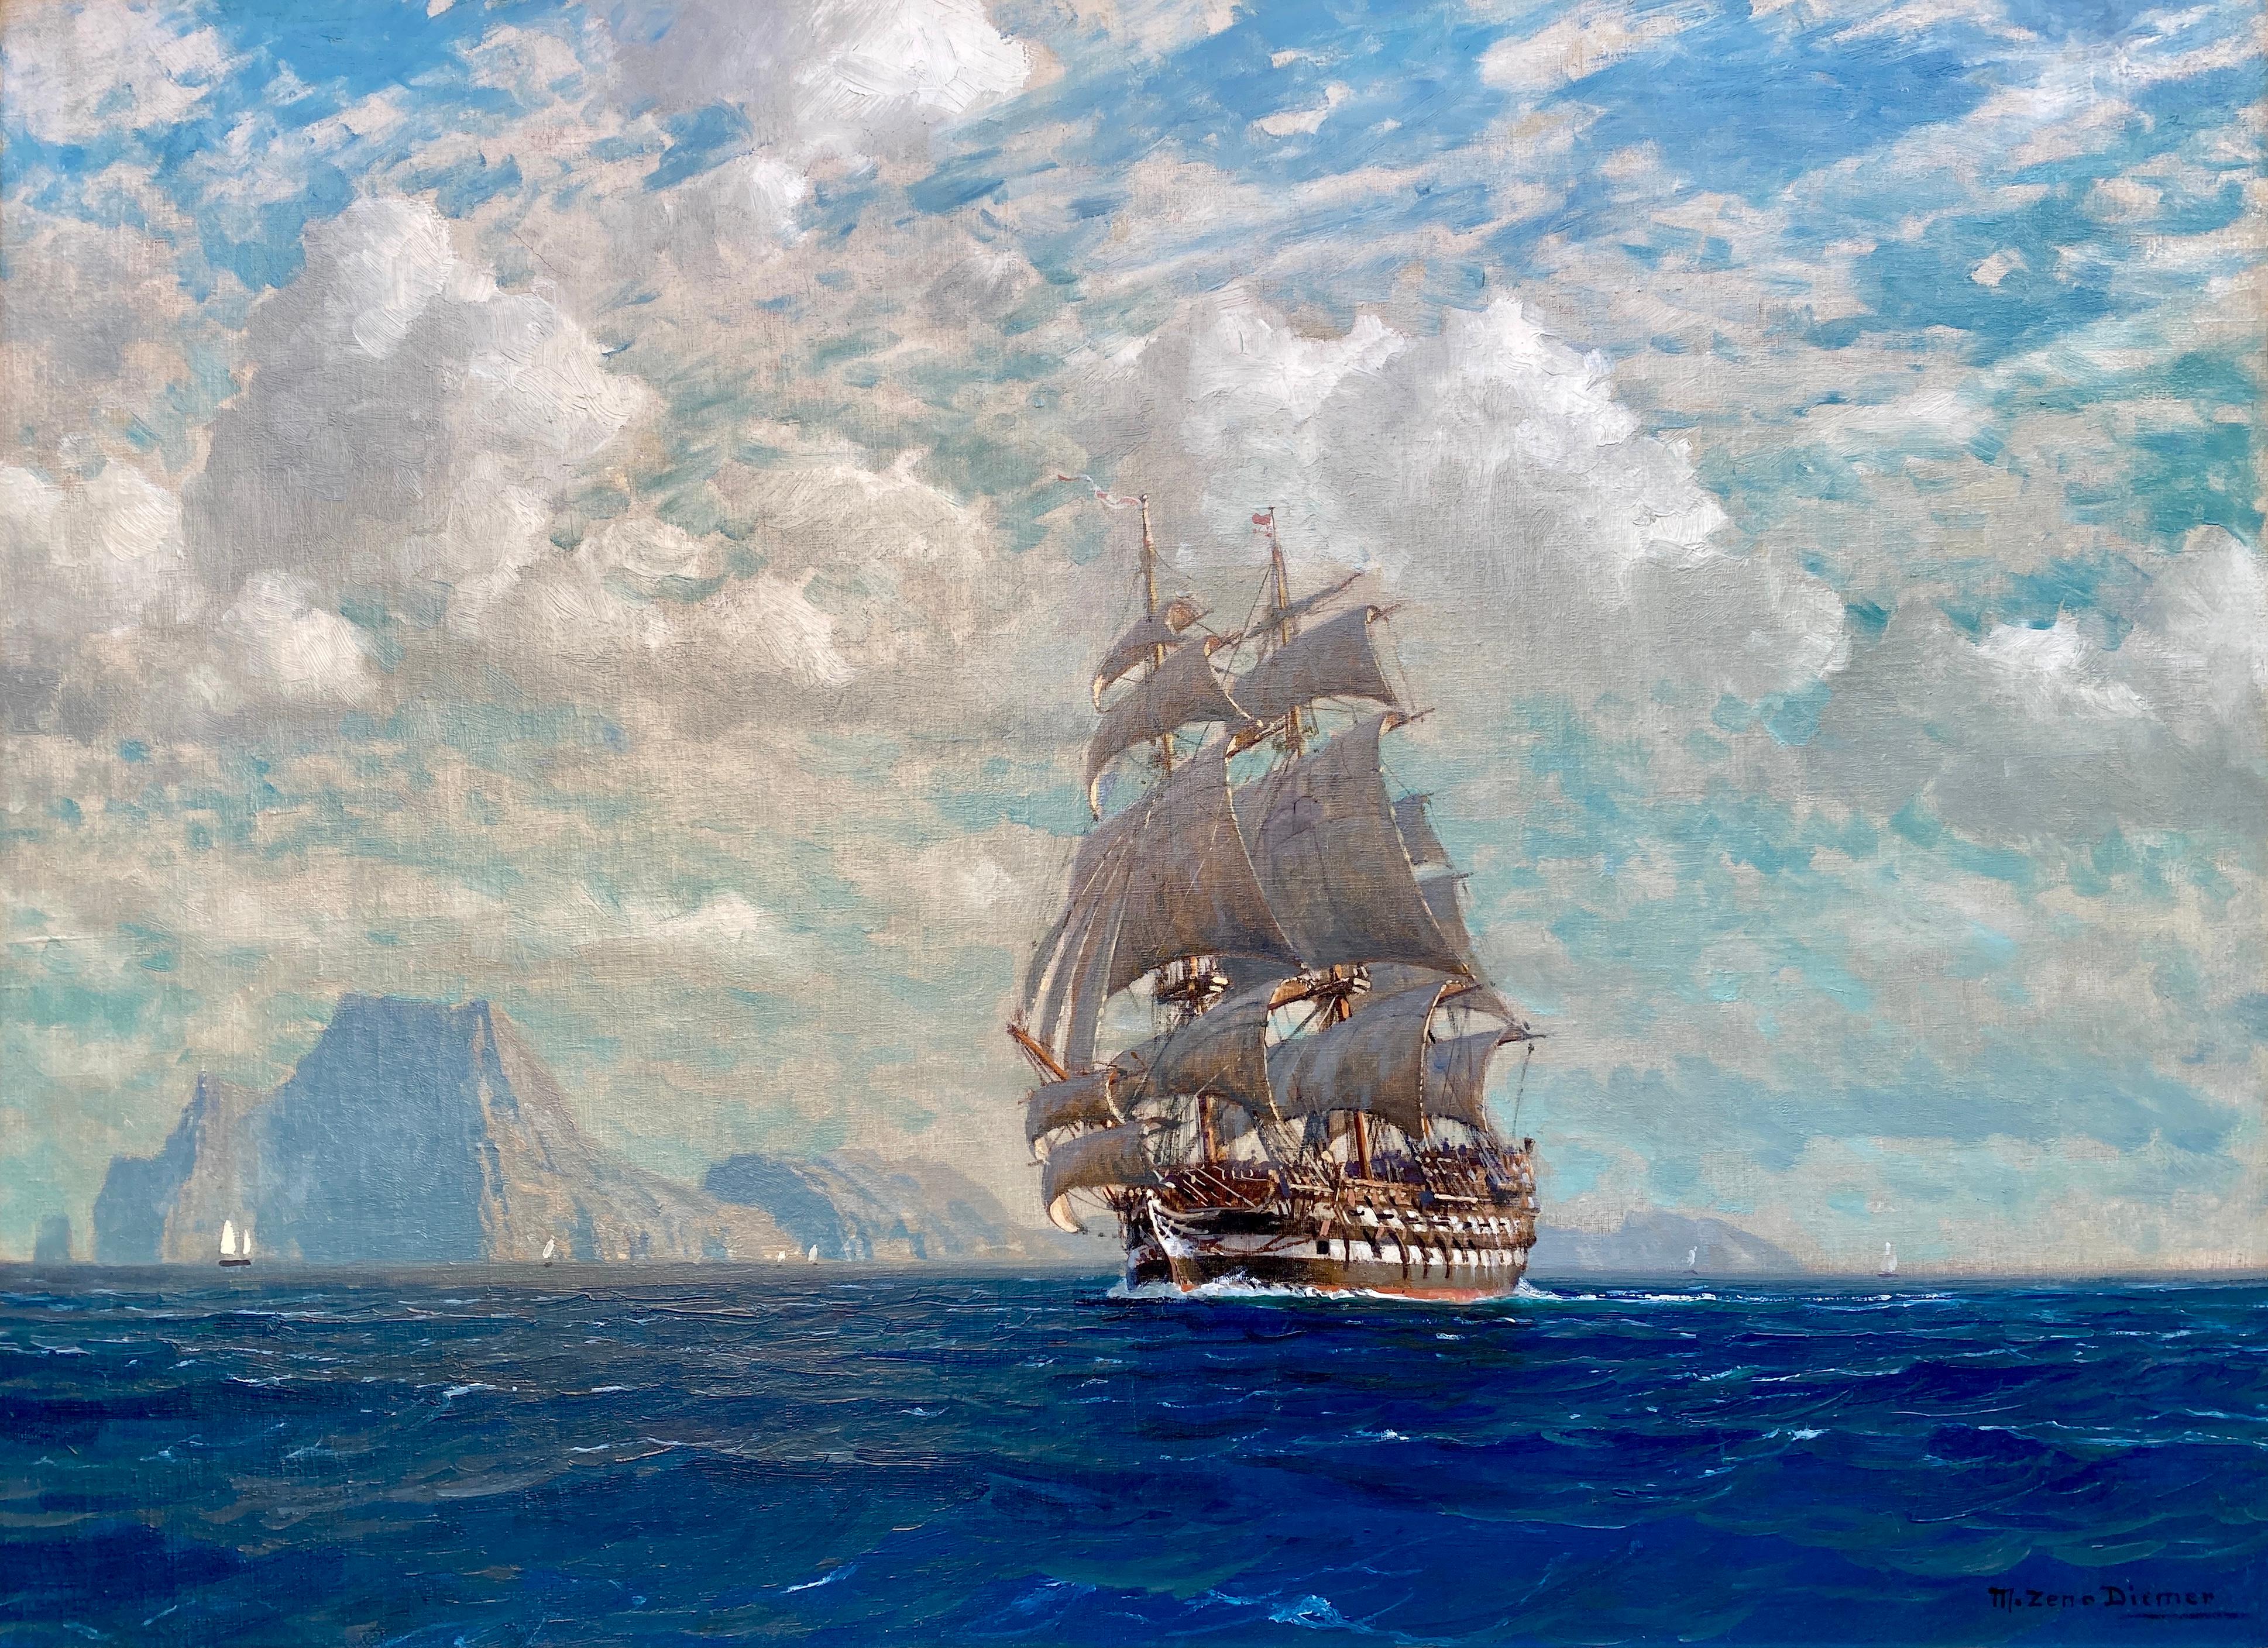 With Full Sails Ahead, Michael Zeno Diemer, Munich 1867 – 1939, Signed - Painting by Diemer Michael Zeno